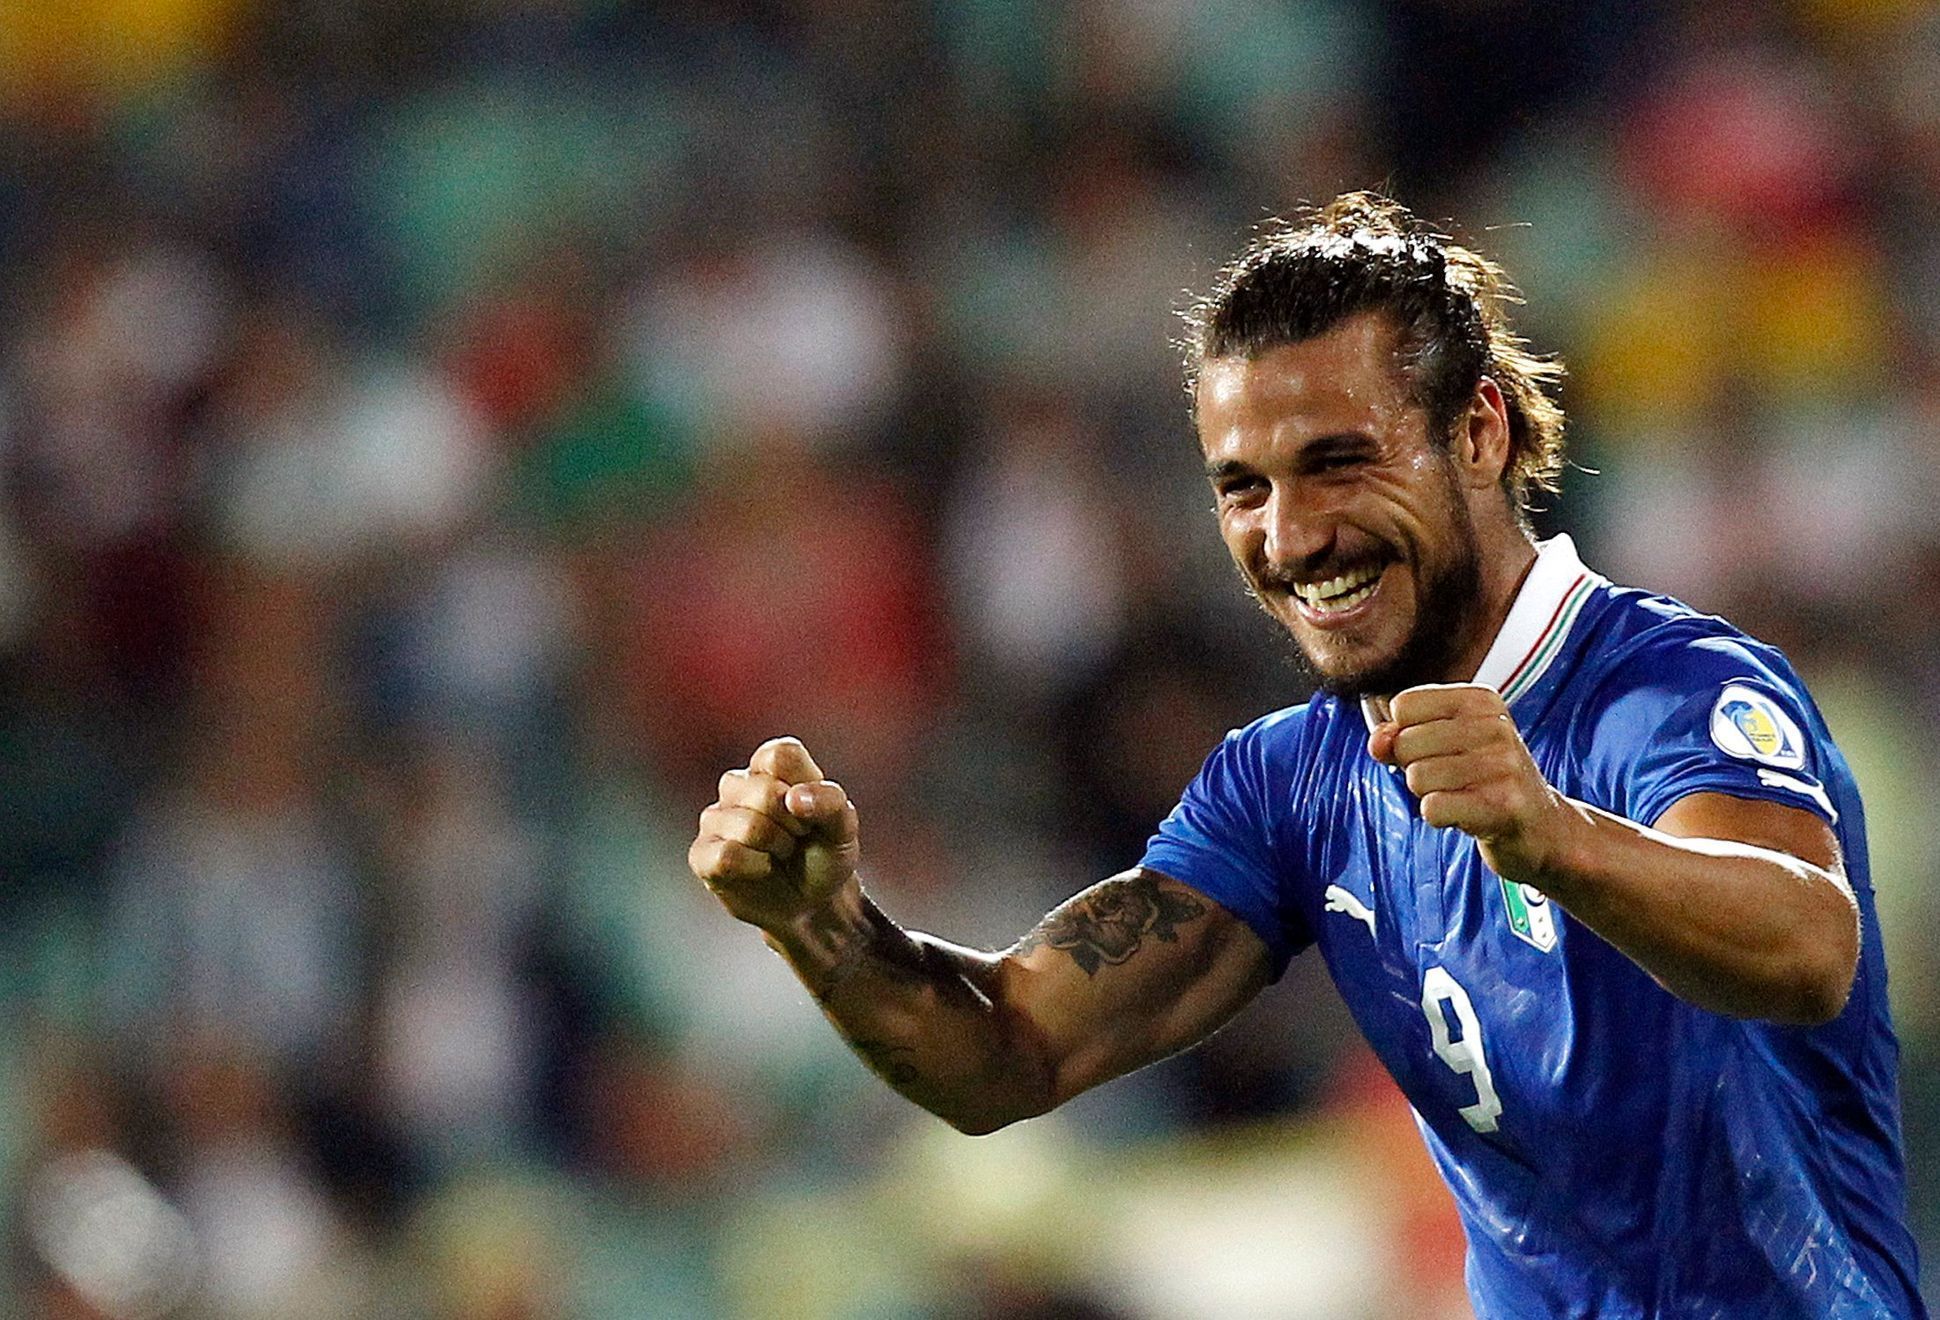 Bulharsko - Itálie (Pablo Osvaldo), kvalifikace na MS 2014